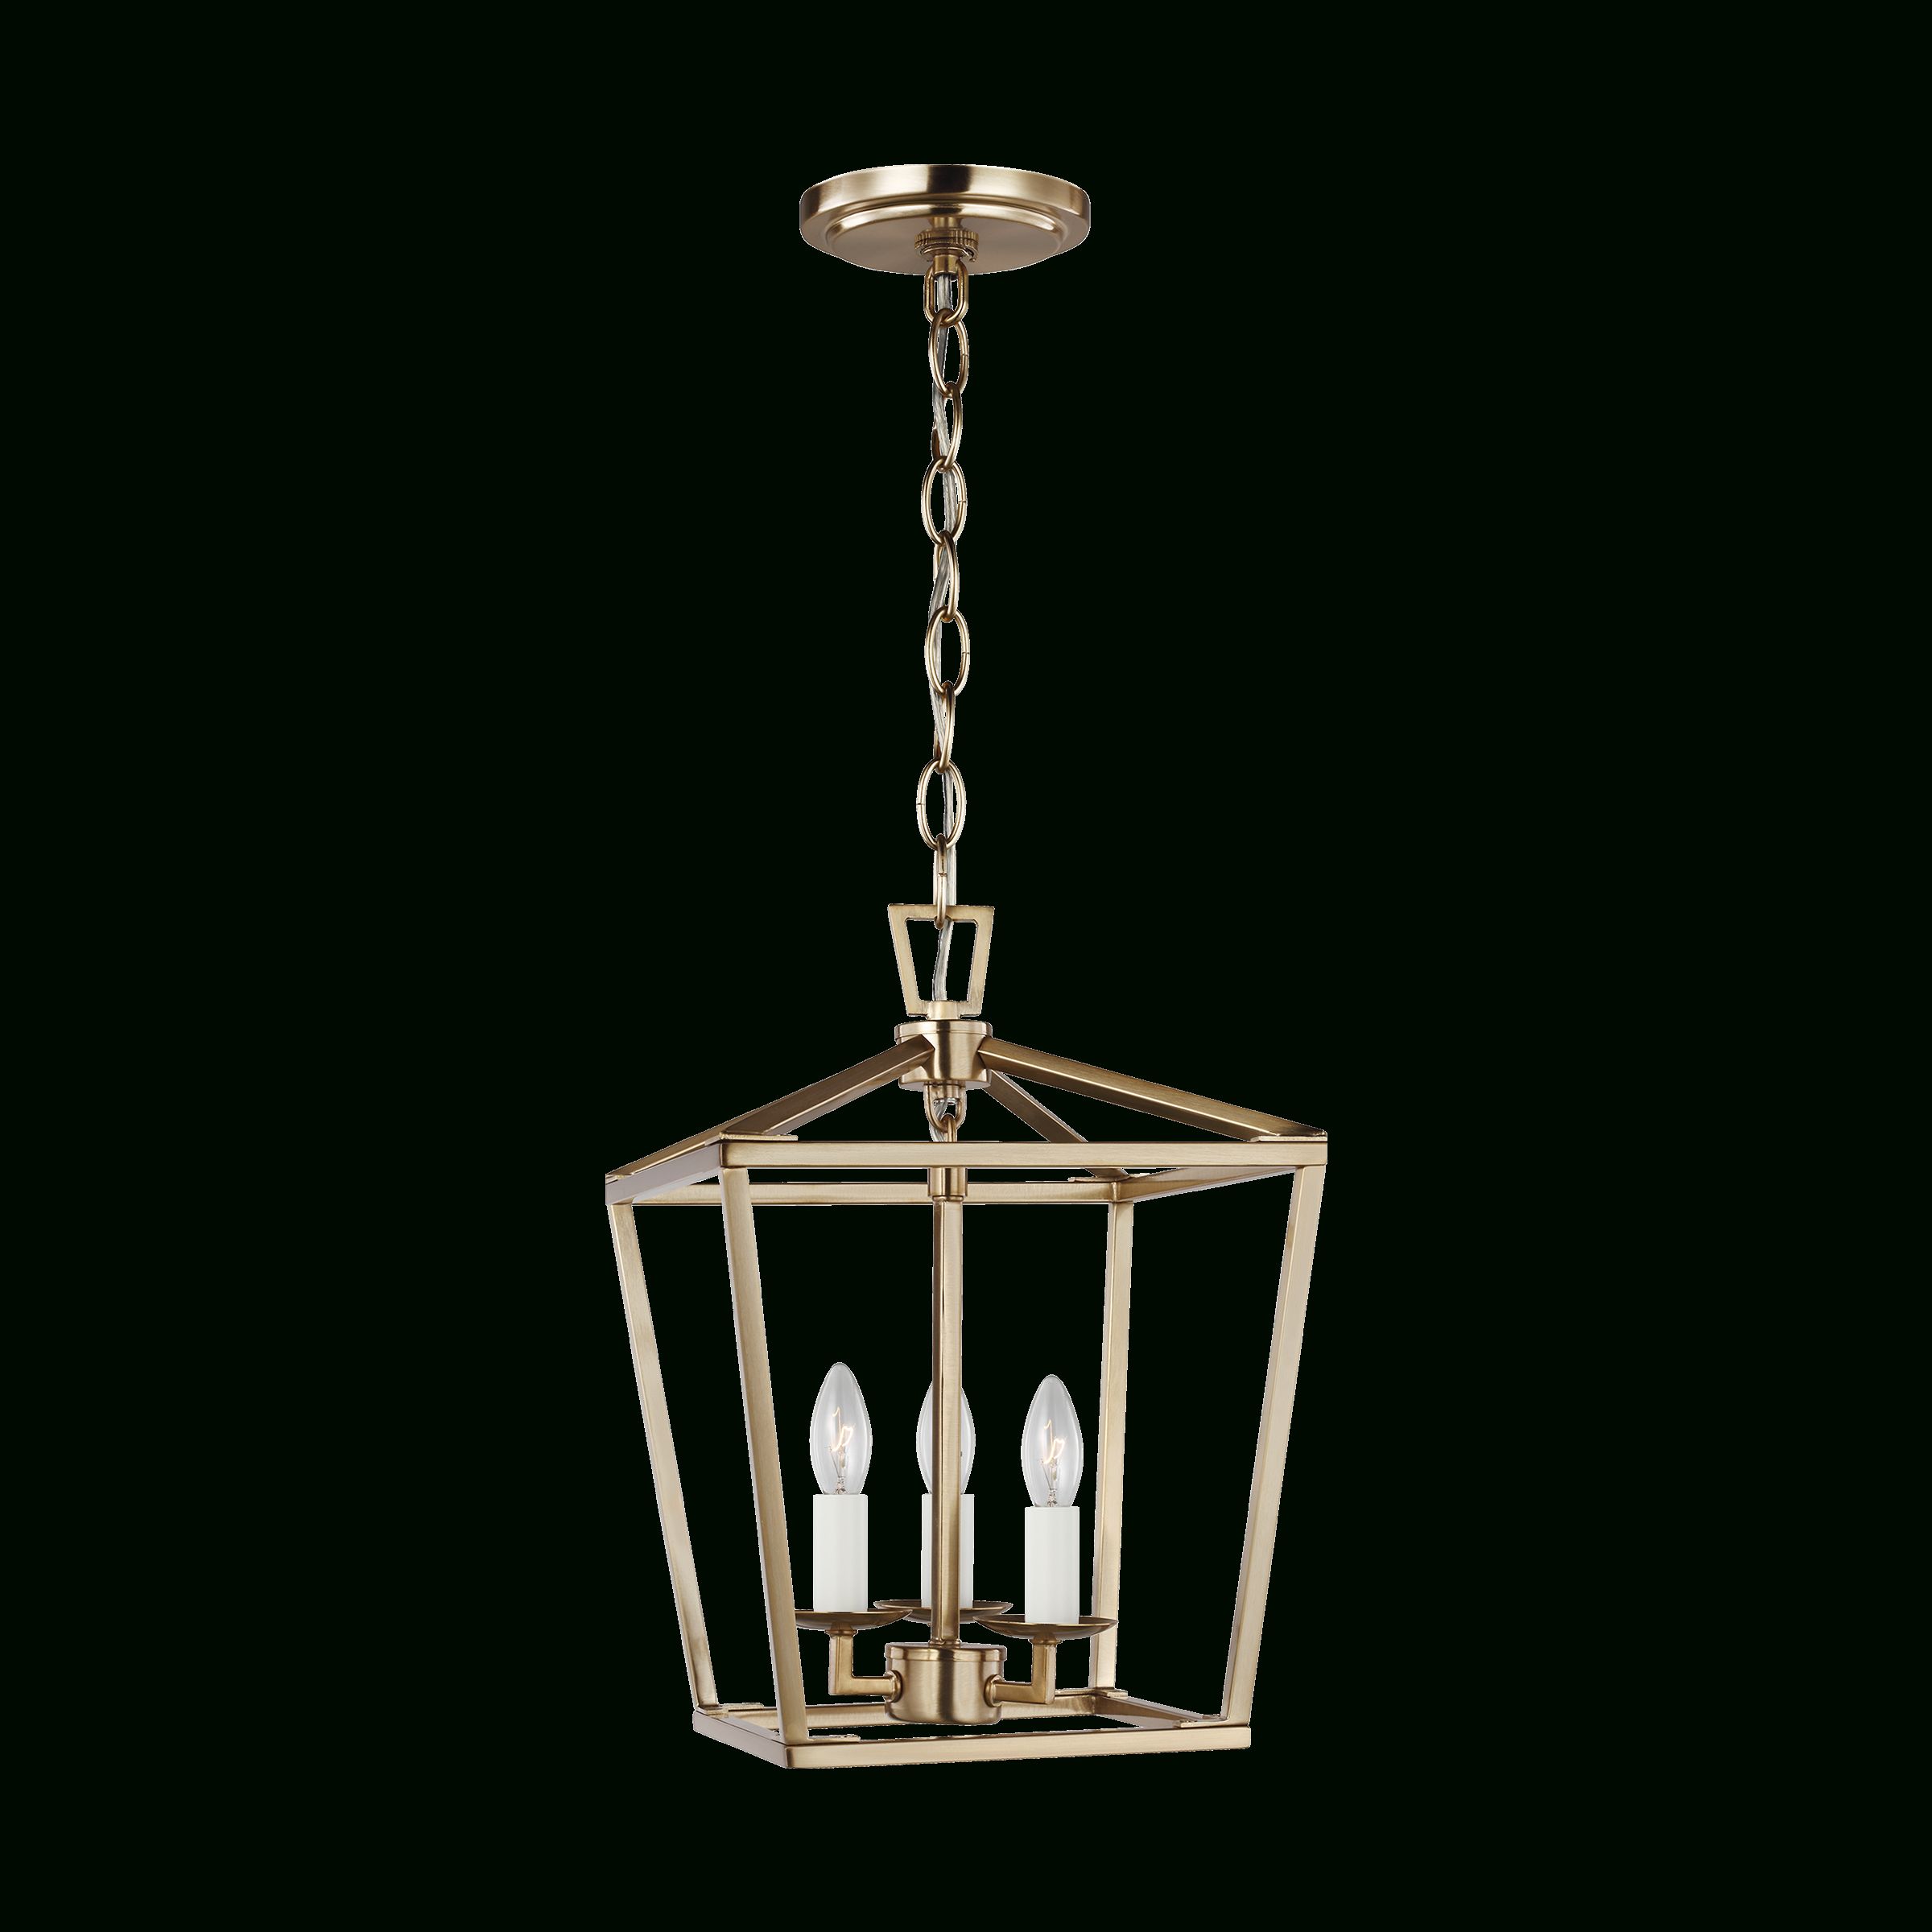 Brass Lantern Pendant Lighting At Lowes Inside Newest Brass Lantern Chandeliers (View 13 of 15)